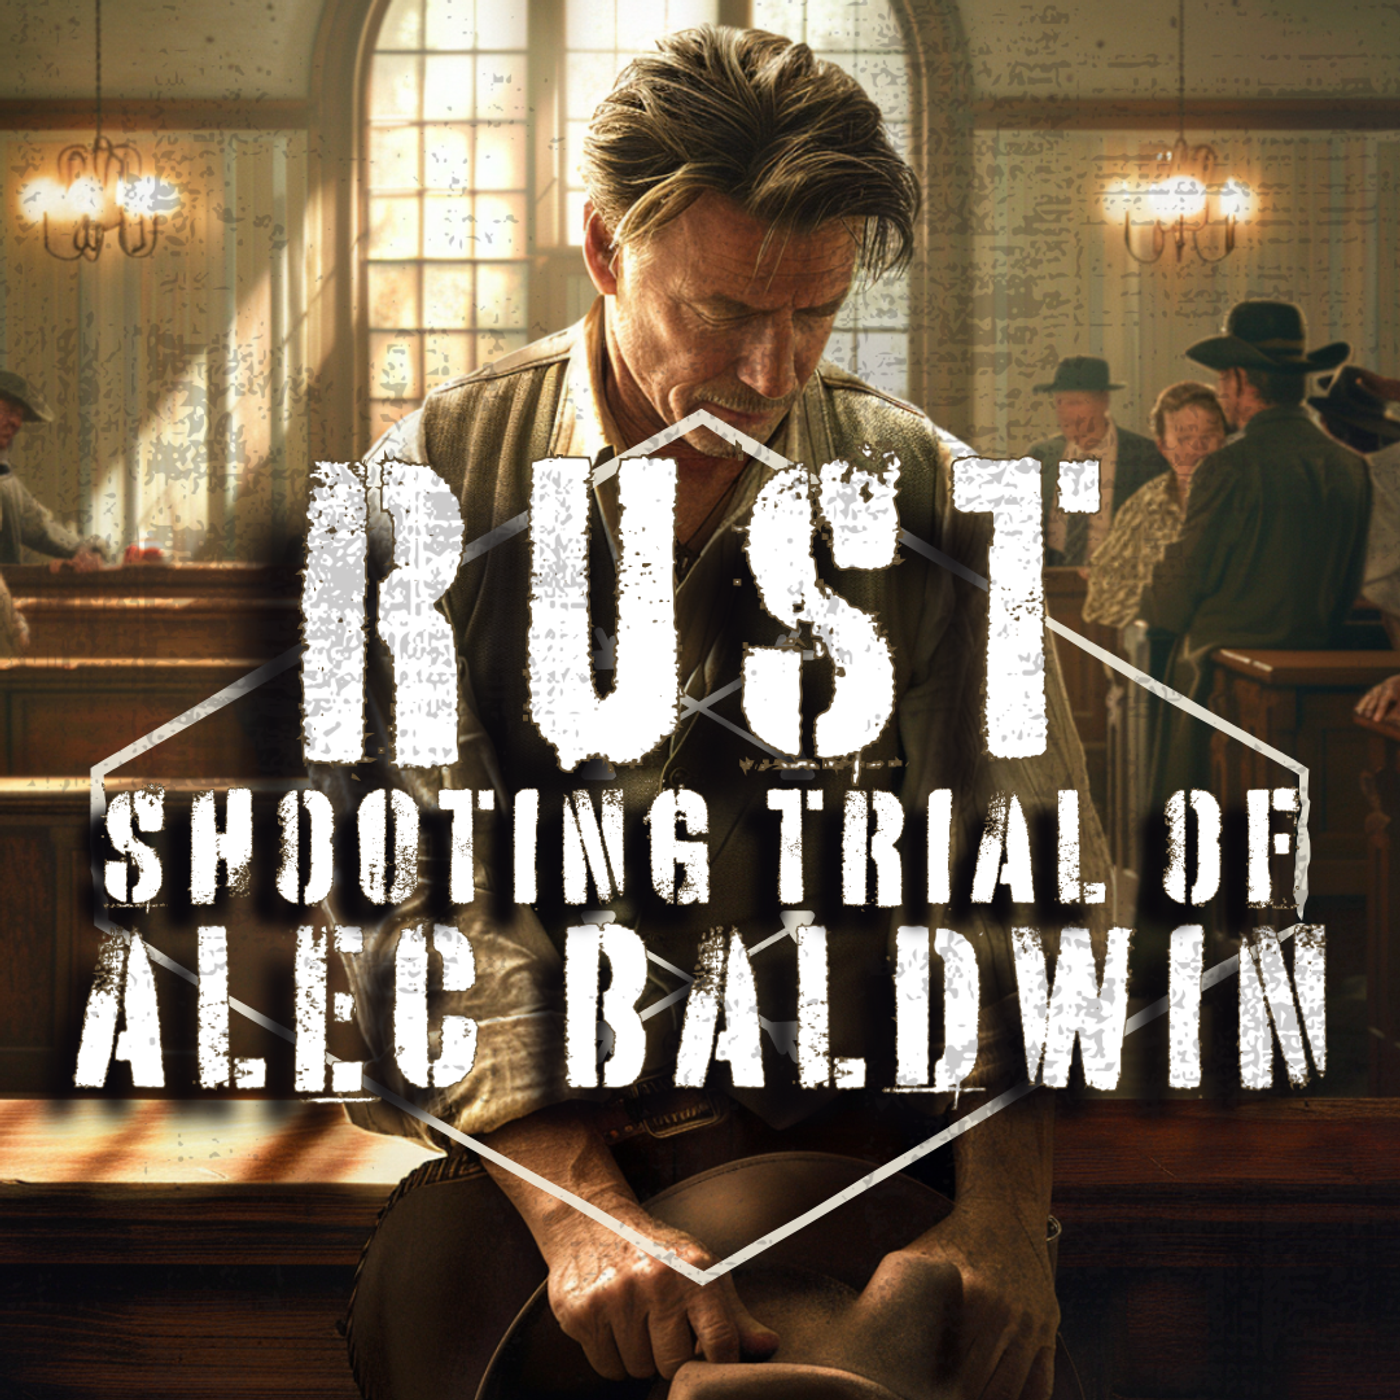 CASE DISMISSED-RUST TRIAL FINAL DAY -NM v. Alec Baldwin Manslaughter Trial- Day 3 Part 3